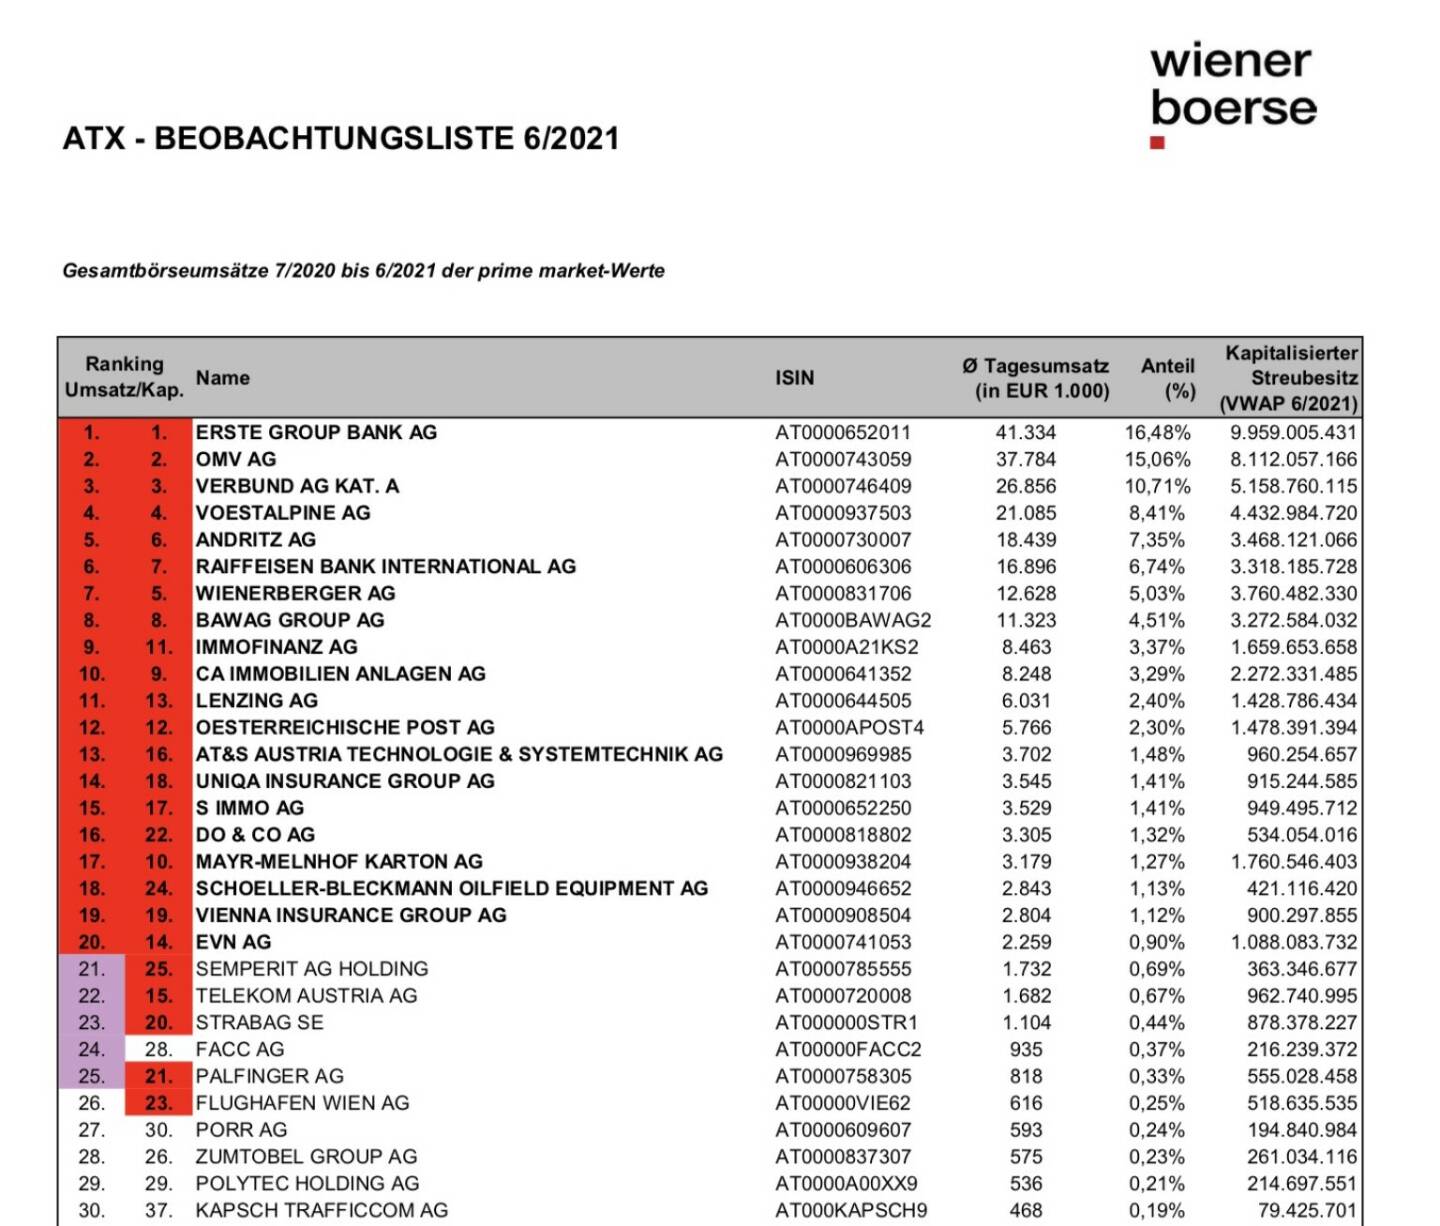 ATX Beobachtungsliste 6/2021 (c) Wiener Börse